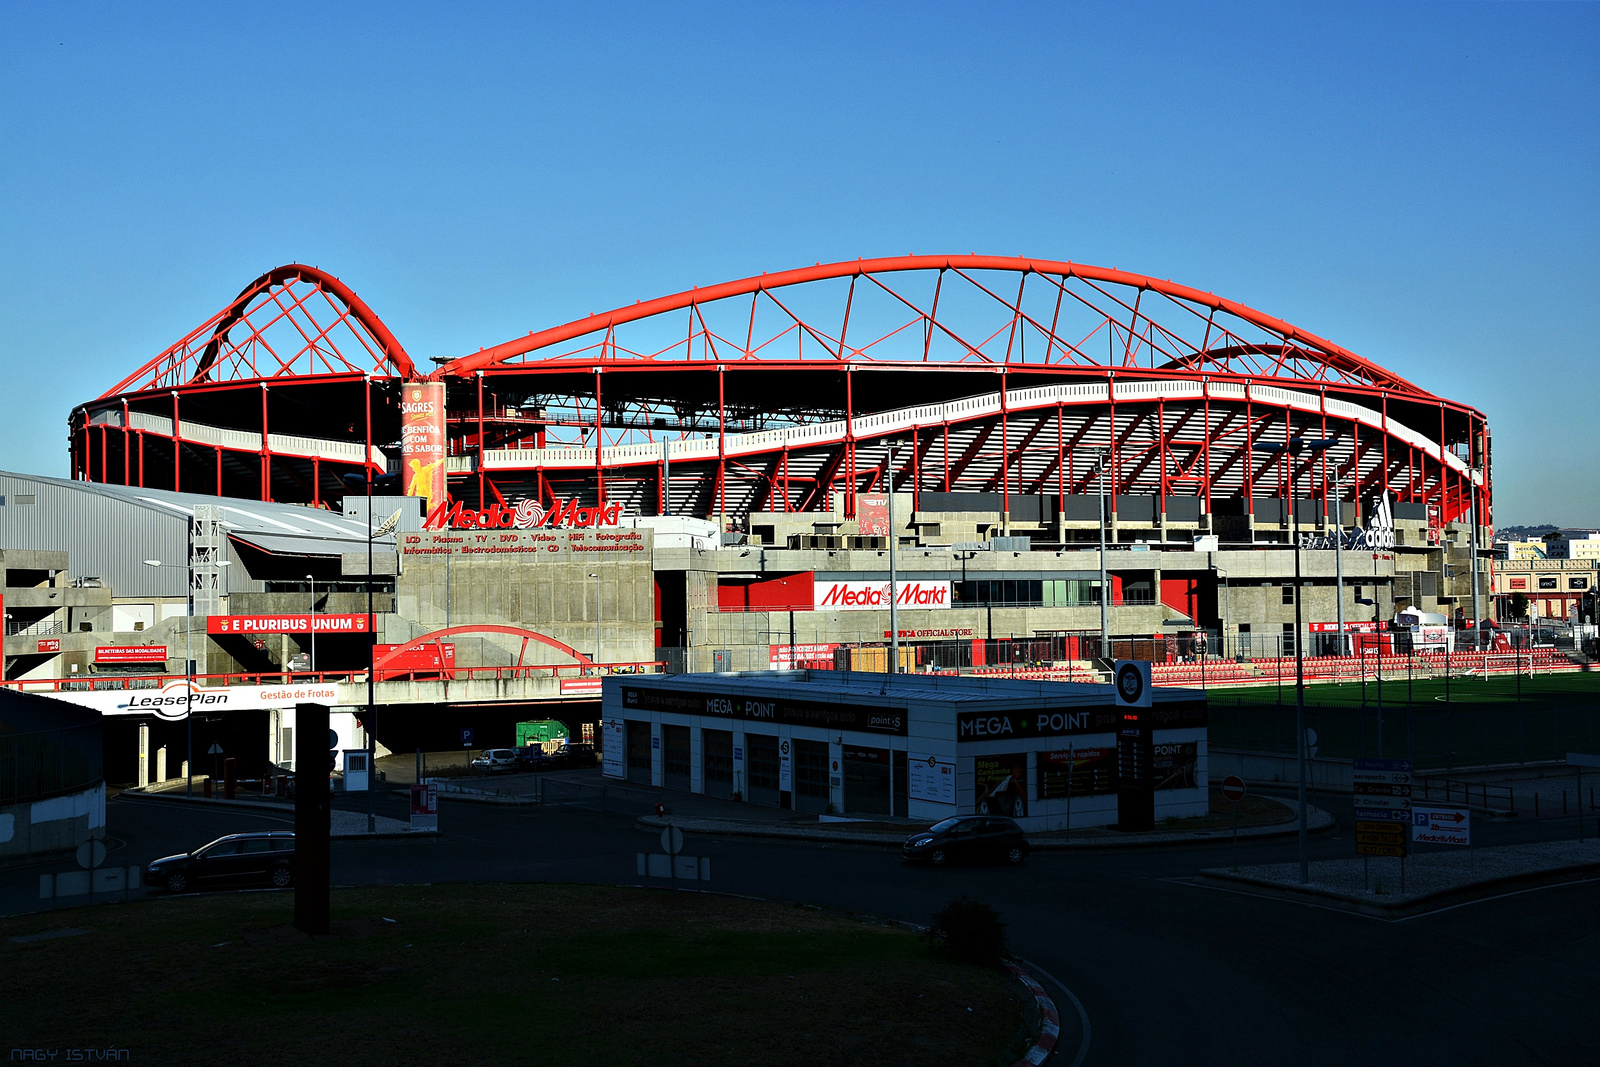 Lisszabon - Benfica Stadion 4606